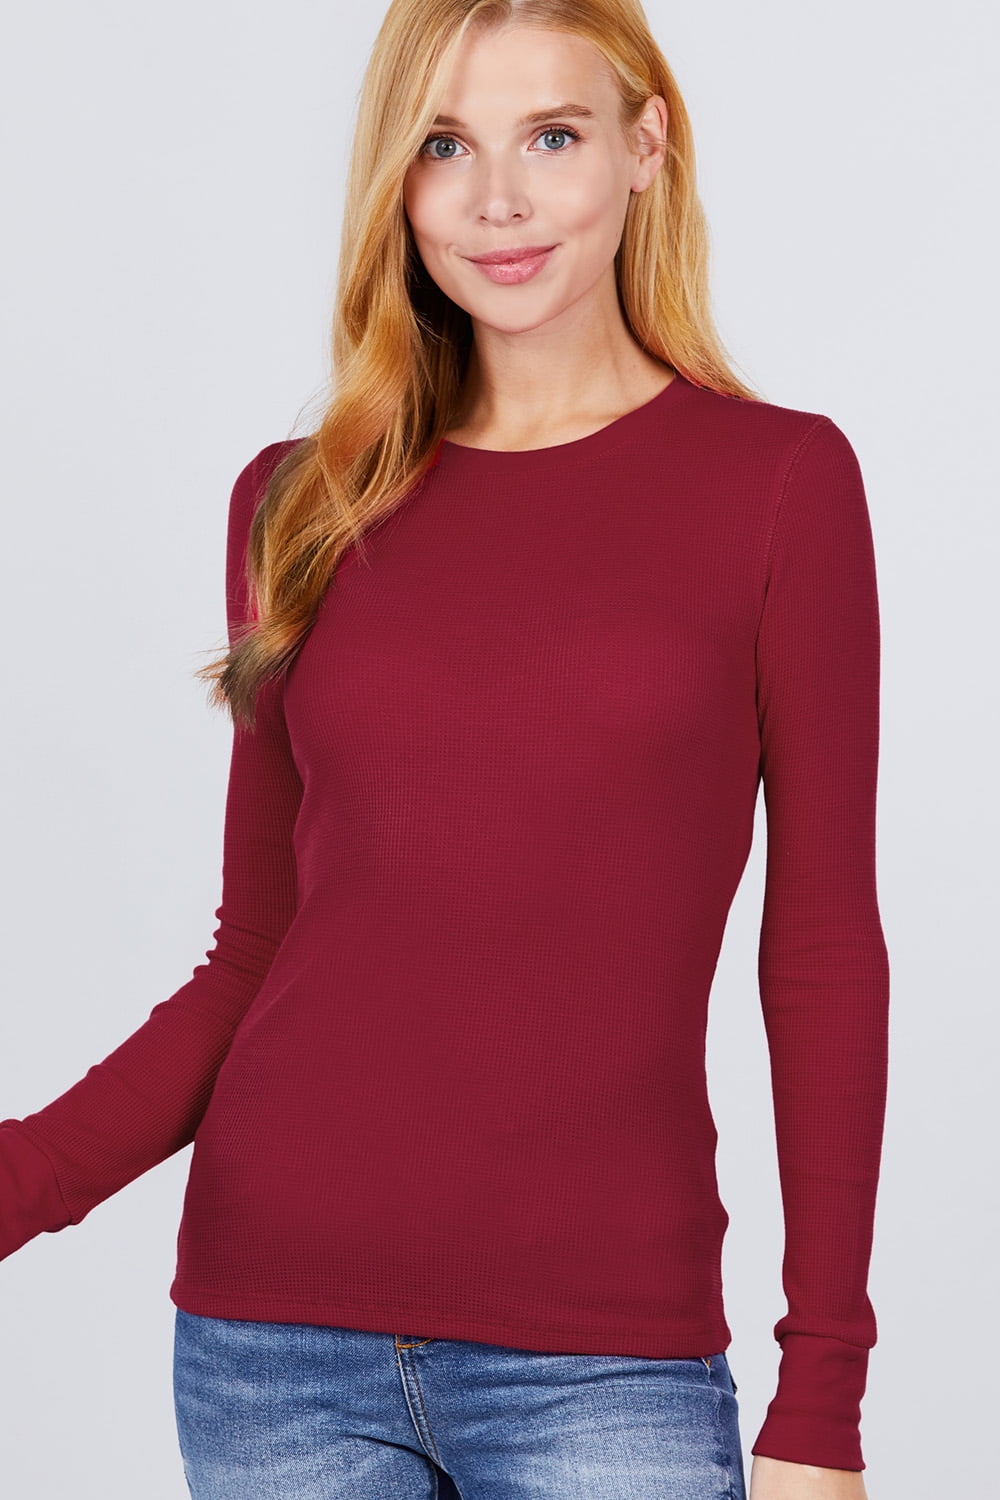 Women's Basic Thermal Long Sleeve Knit T-Shirt Crew Neck - Walmart.com